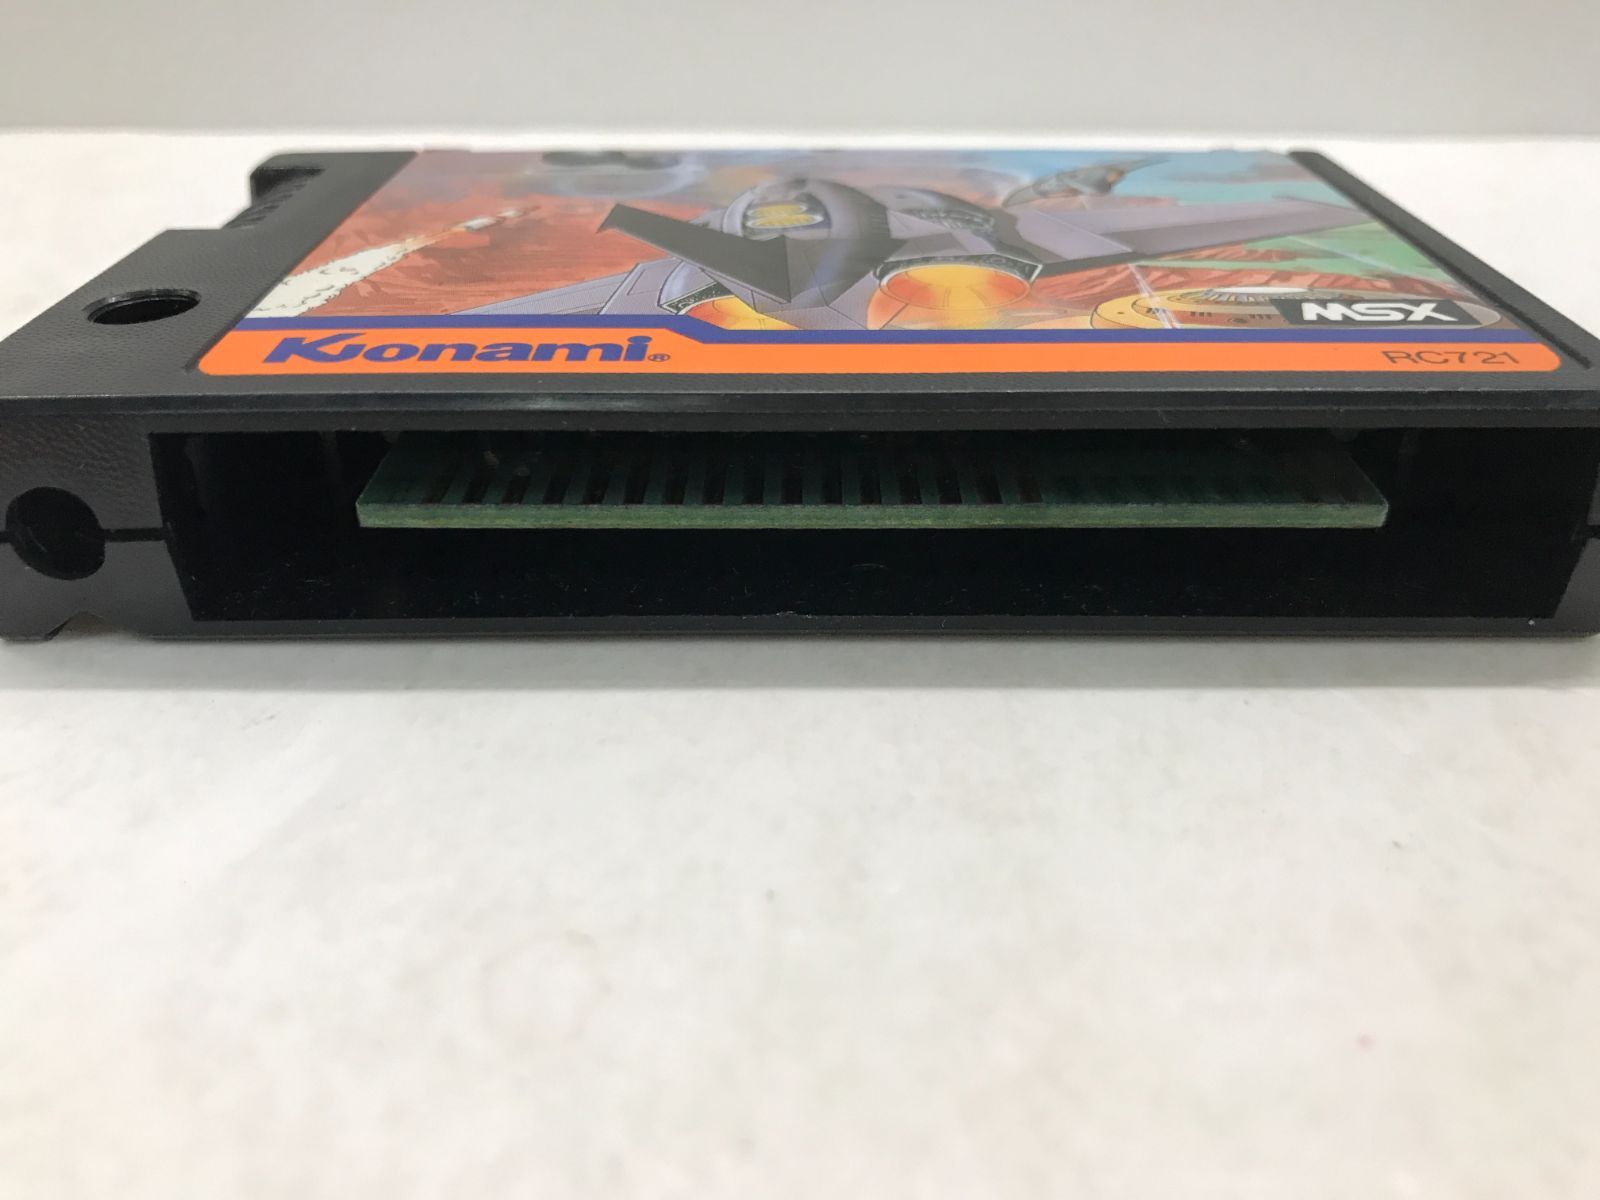 MSX】スカイジャガー 箱・説明書付き Konami 111 - メルカリ